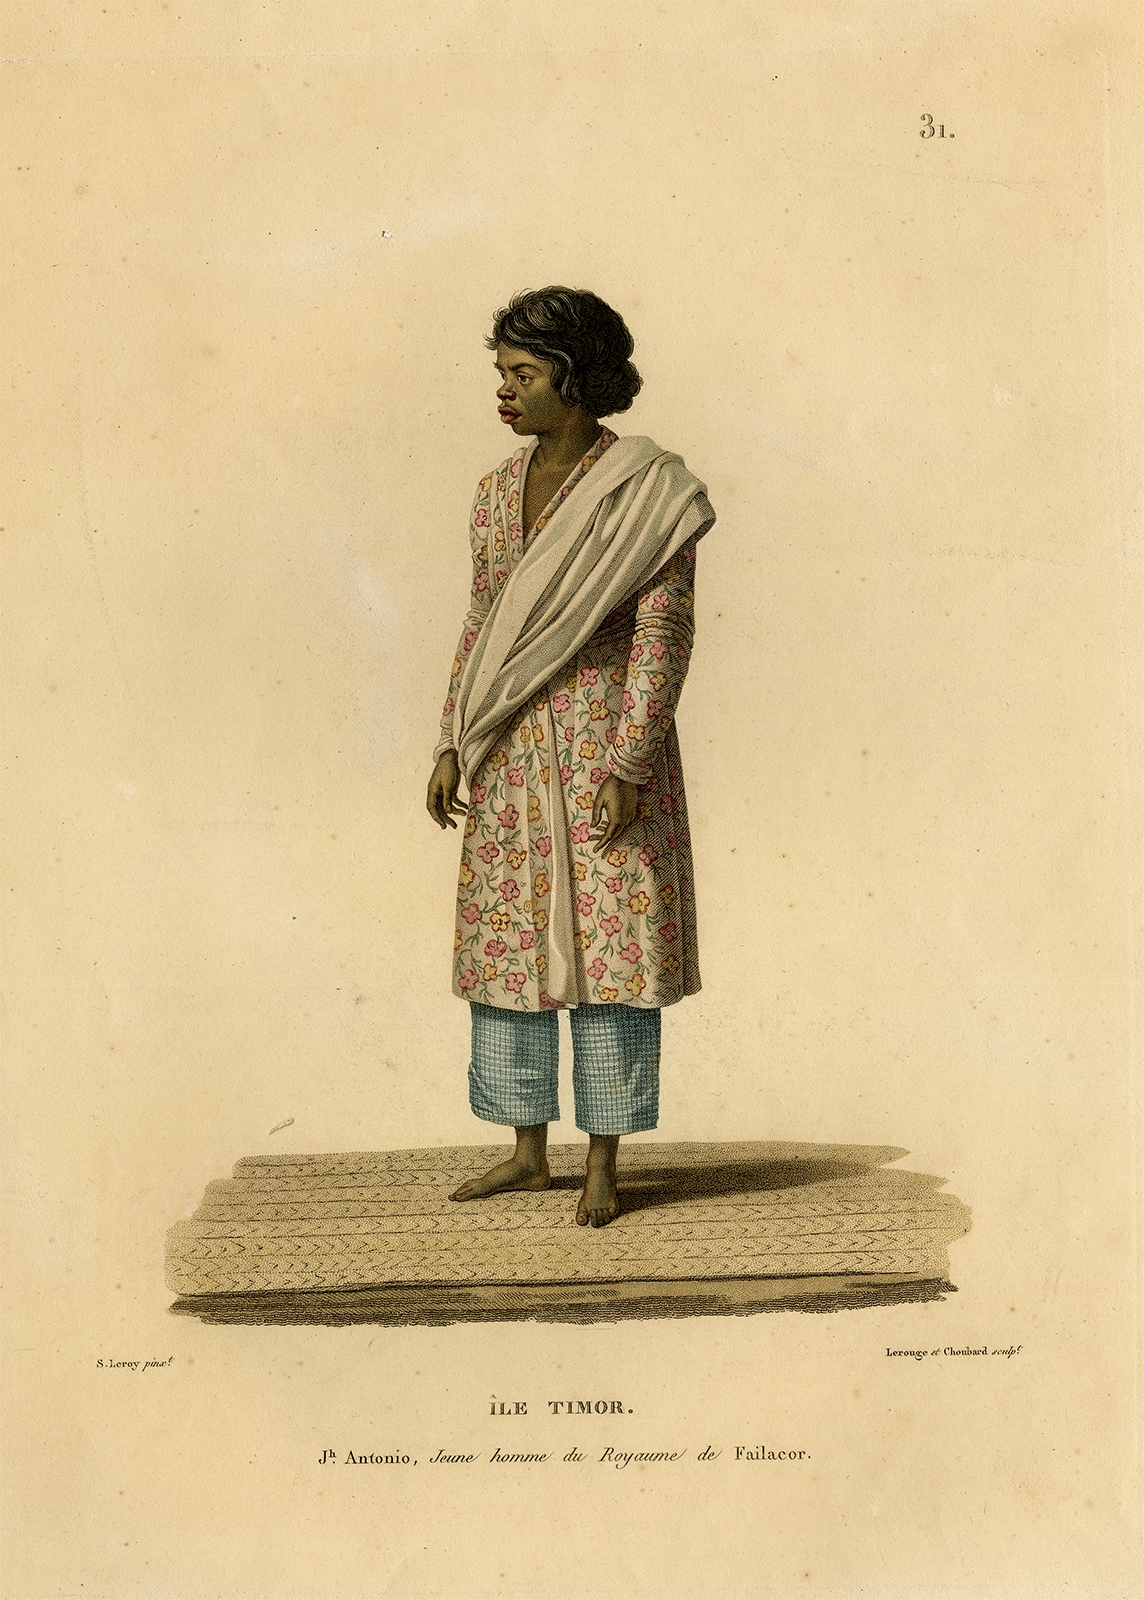 Ile Timor - Lerouge & Choubard (1825)